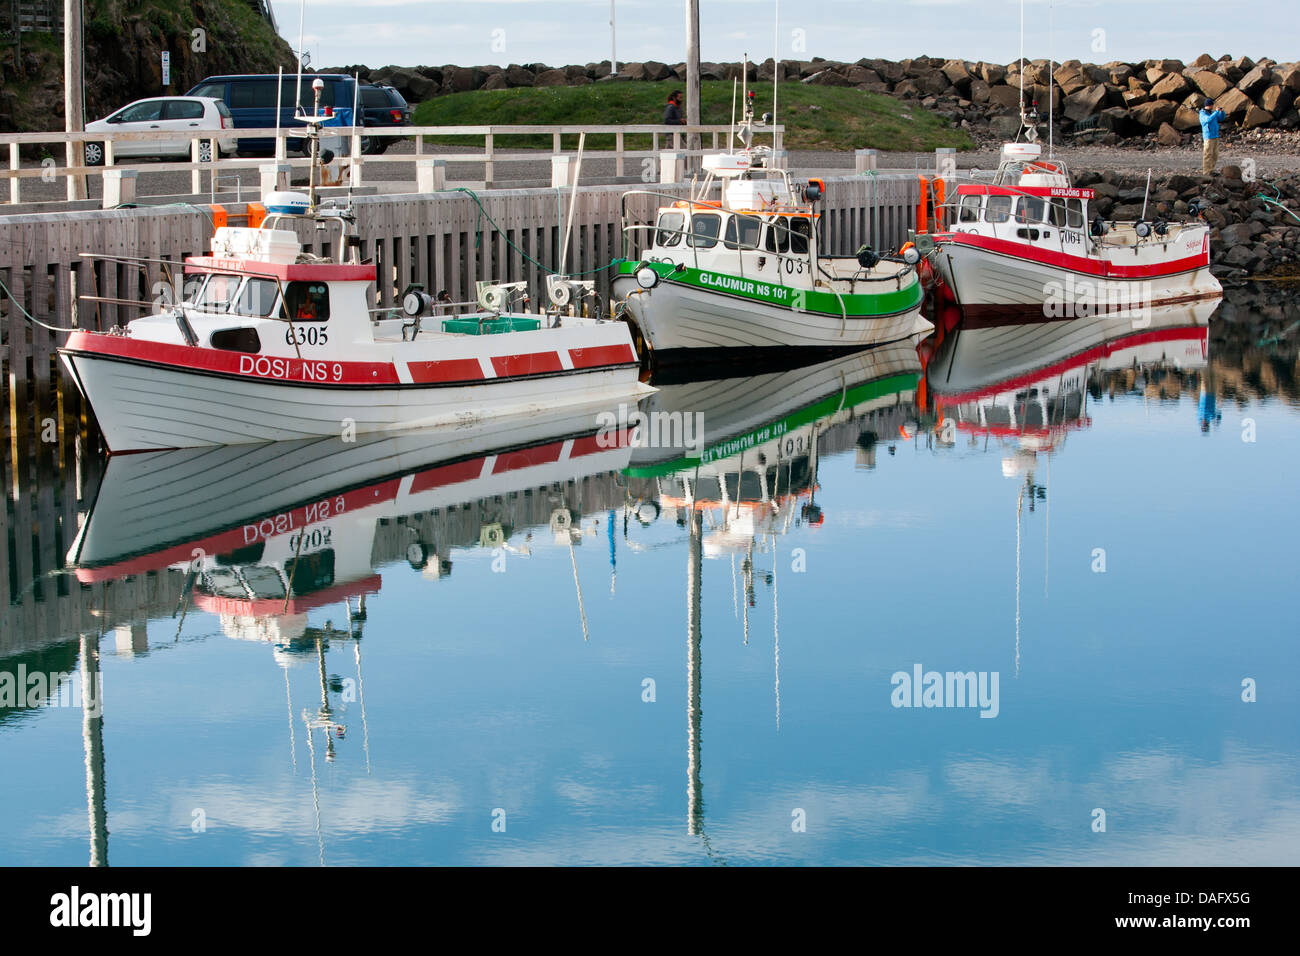 Borgarfjordur Harbour - vicino a Bakkagerdi, Islanda Orientale Foto Stock